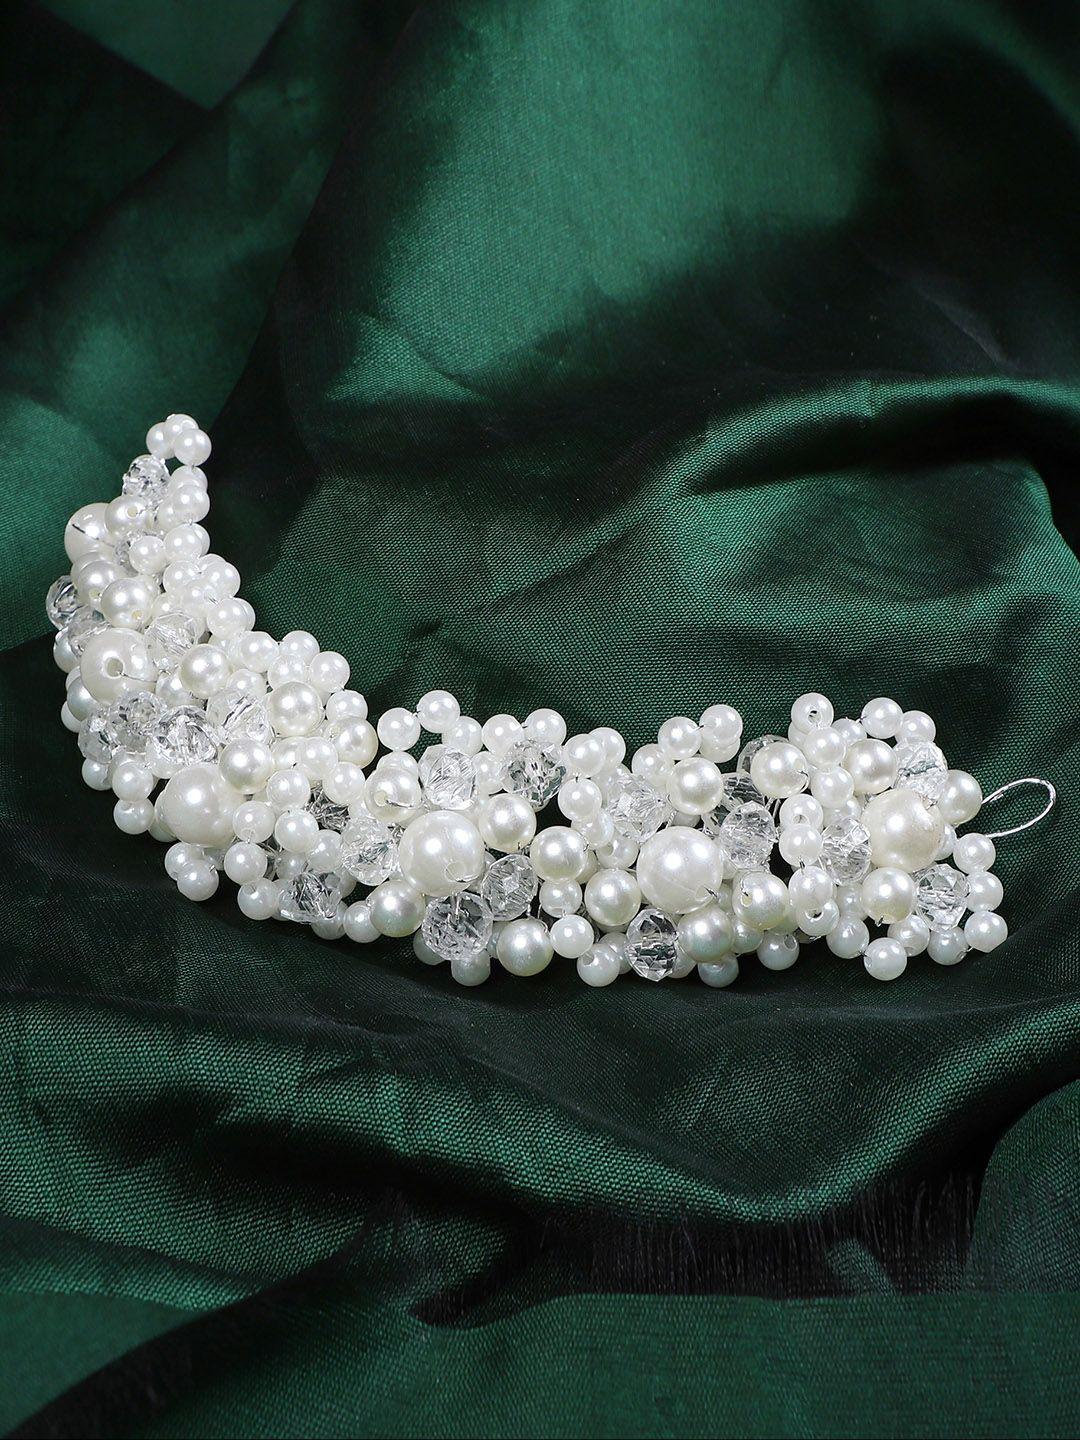 aquastreet-white-pearls-hair-accessory